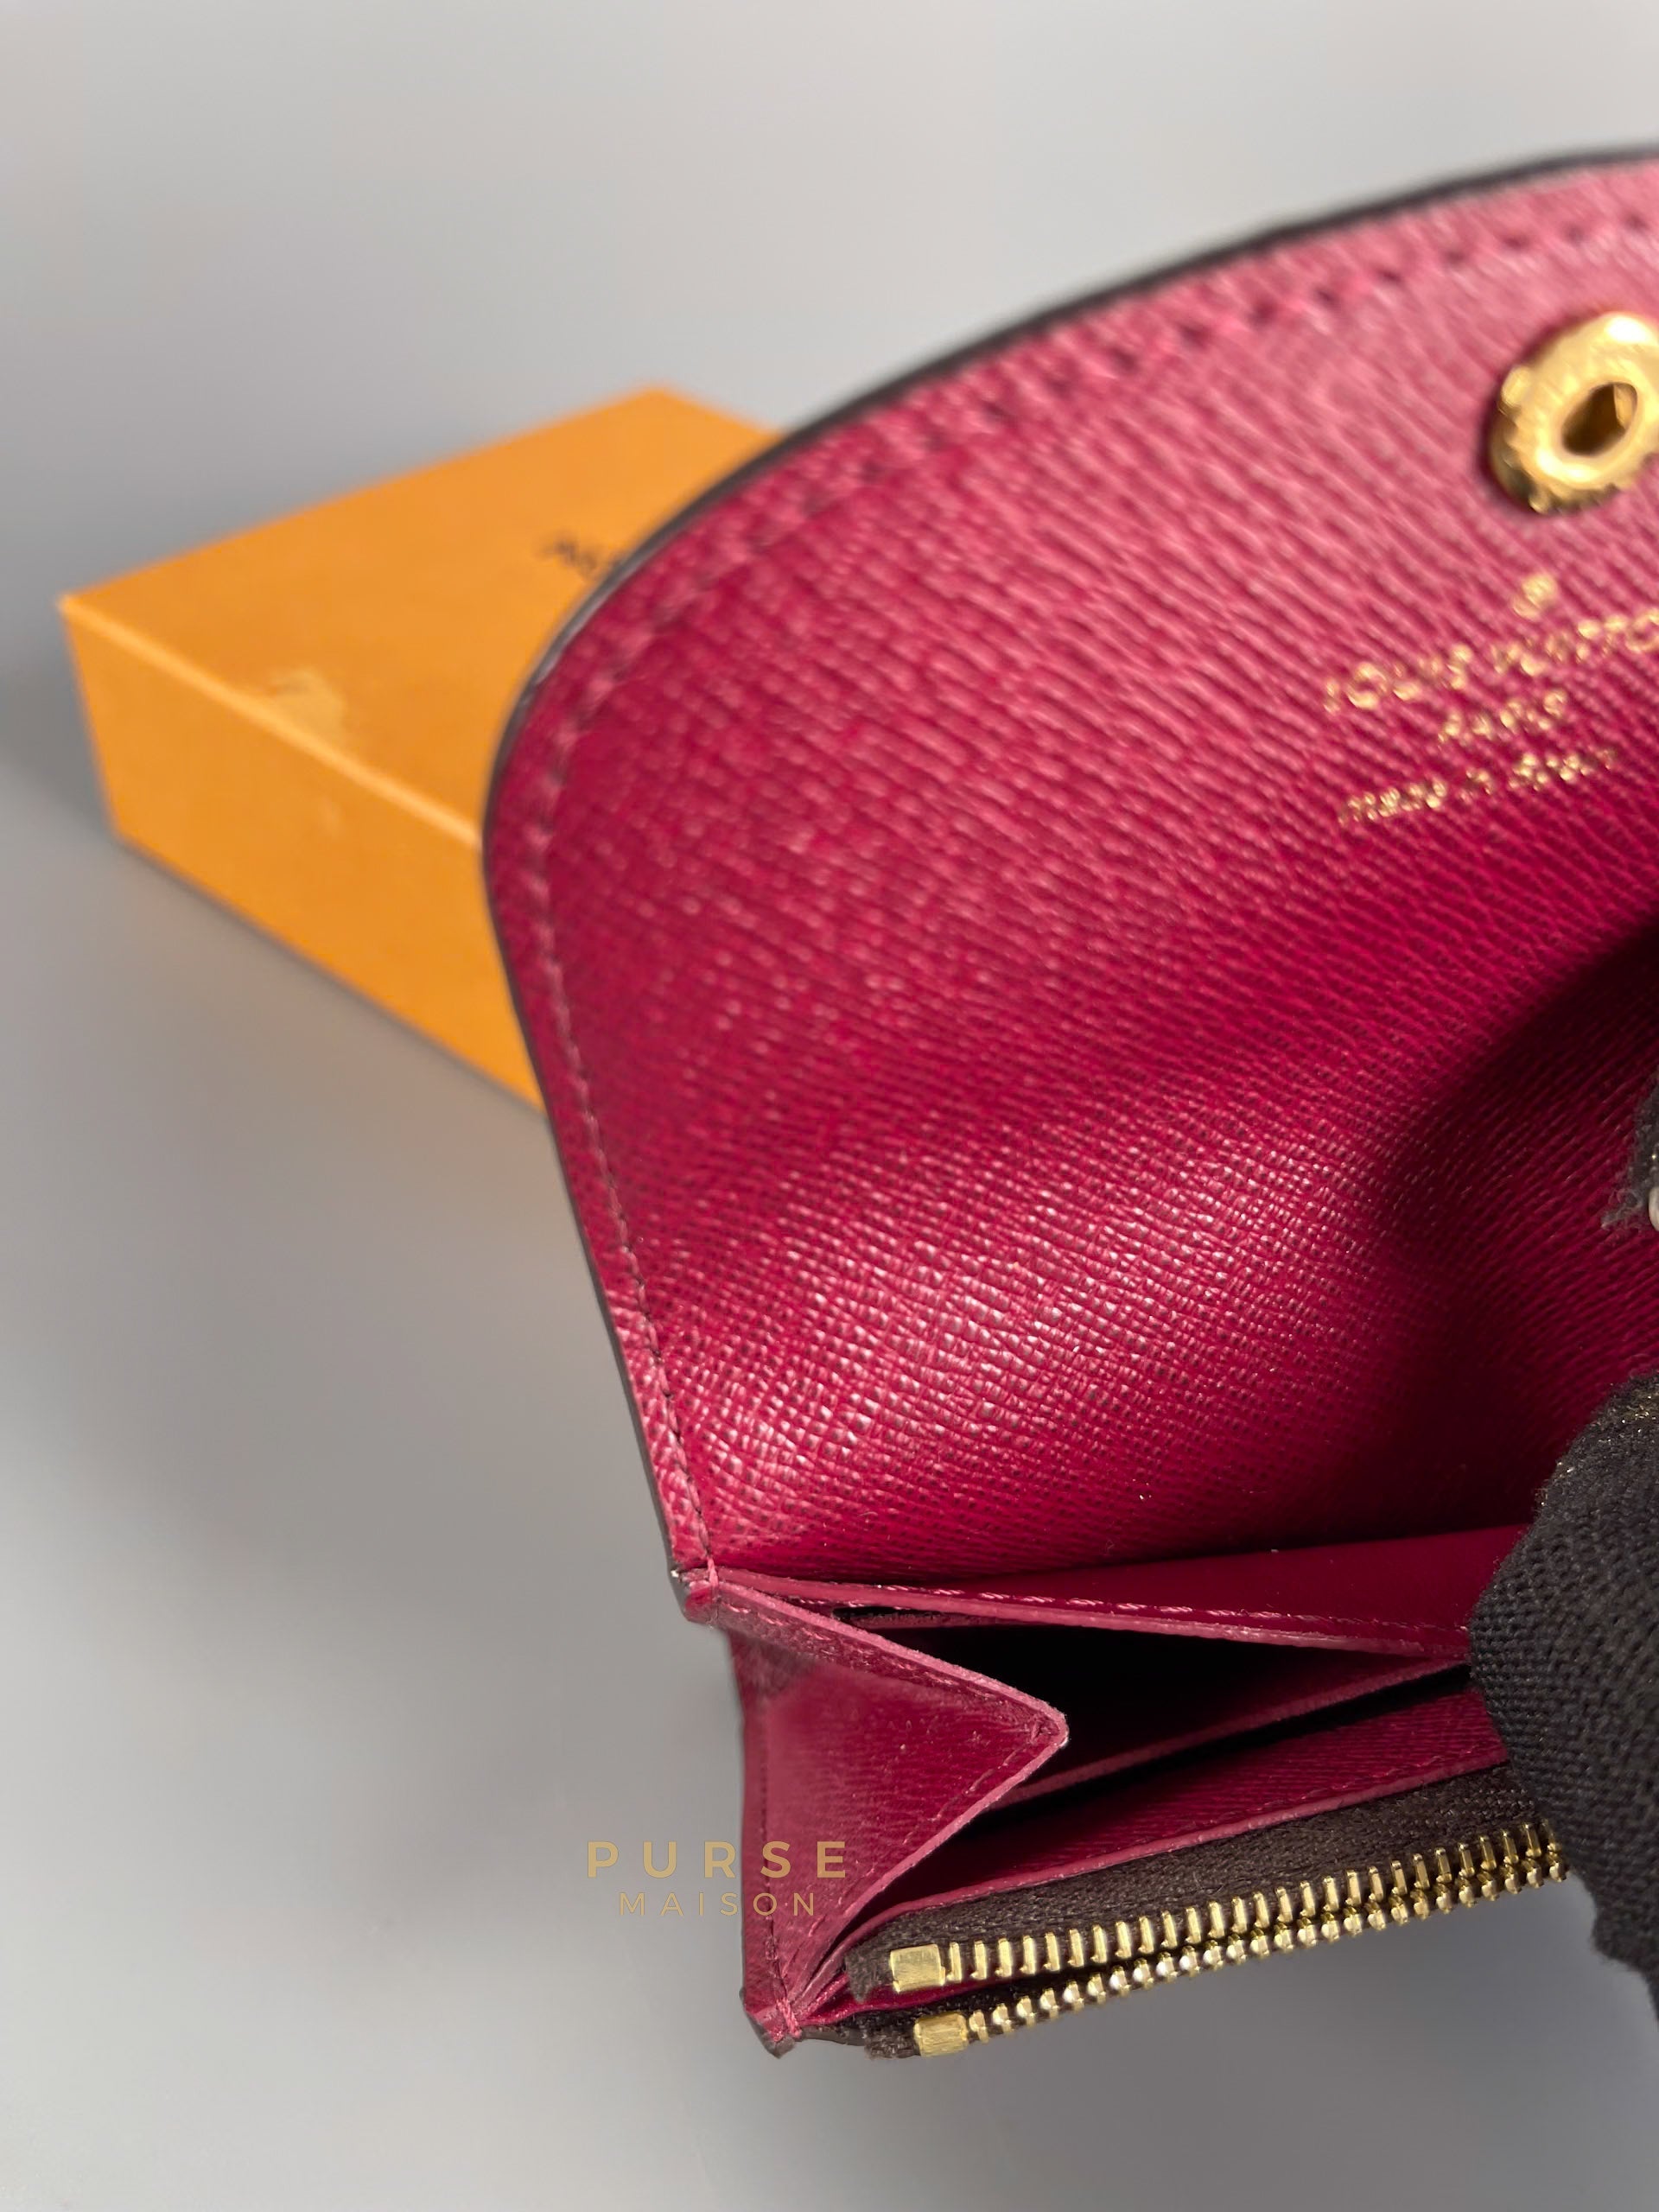 Louis Vuitton Rosalie Coin Purse in Monogram Fuchsia Interior (Date code: UB2230) | Purse Maison Luxury Bags Shop